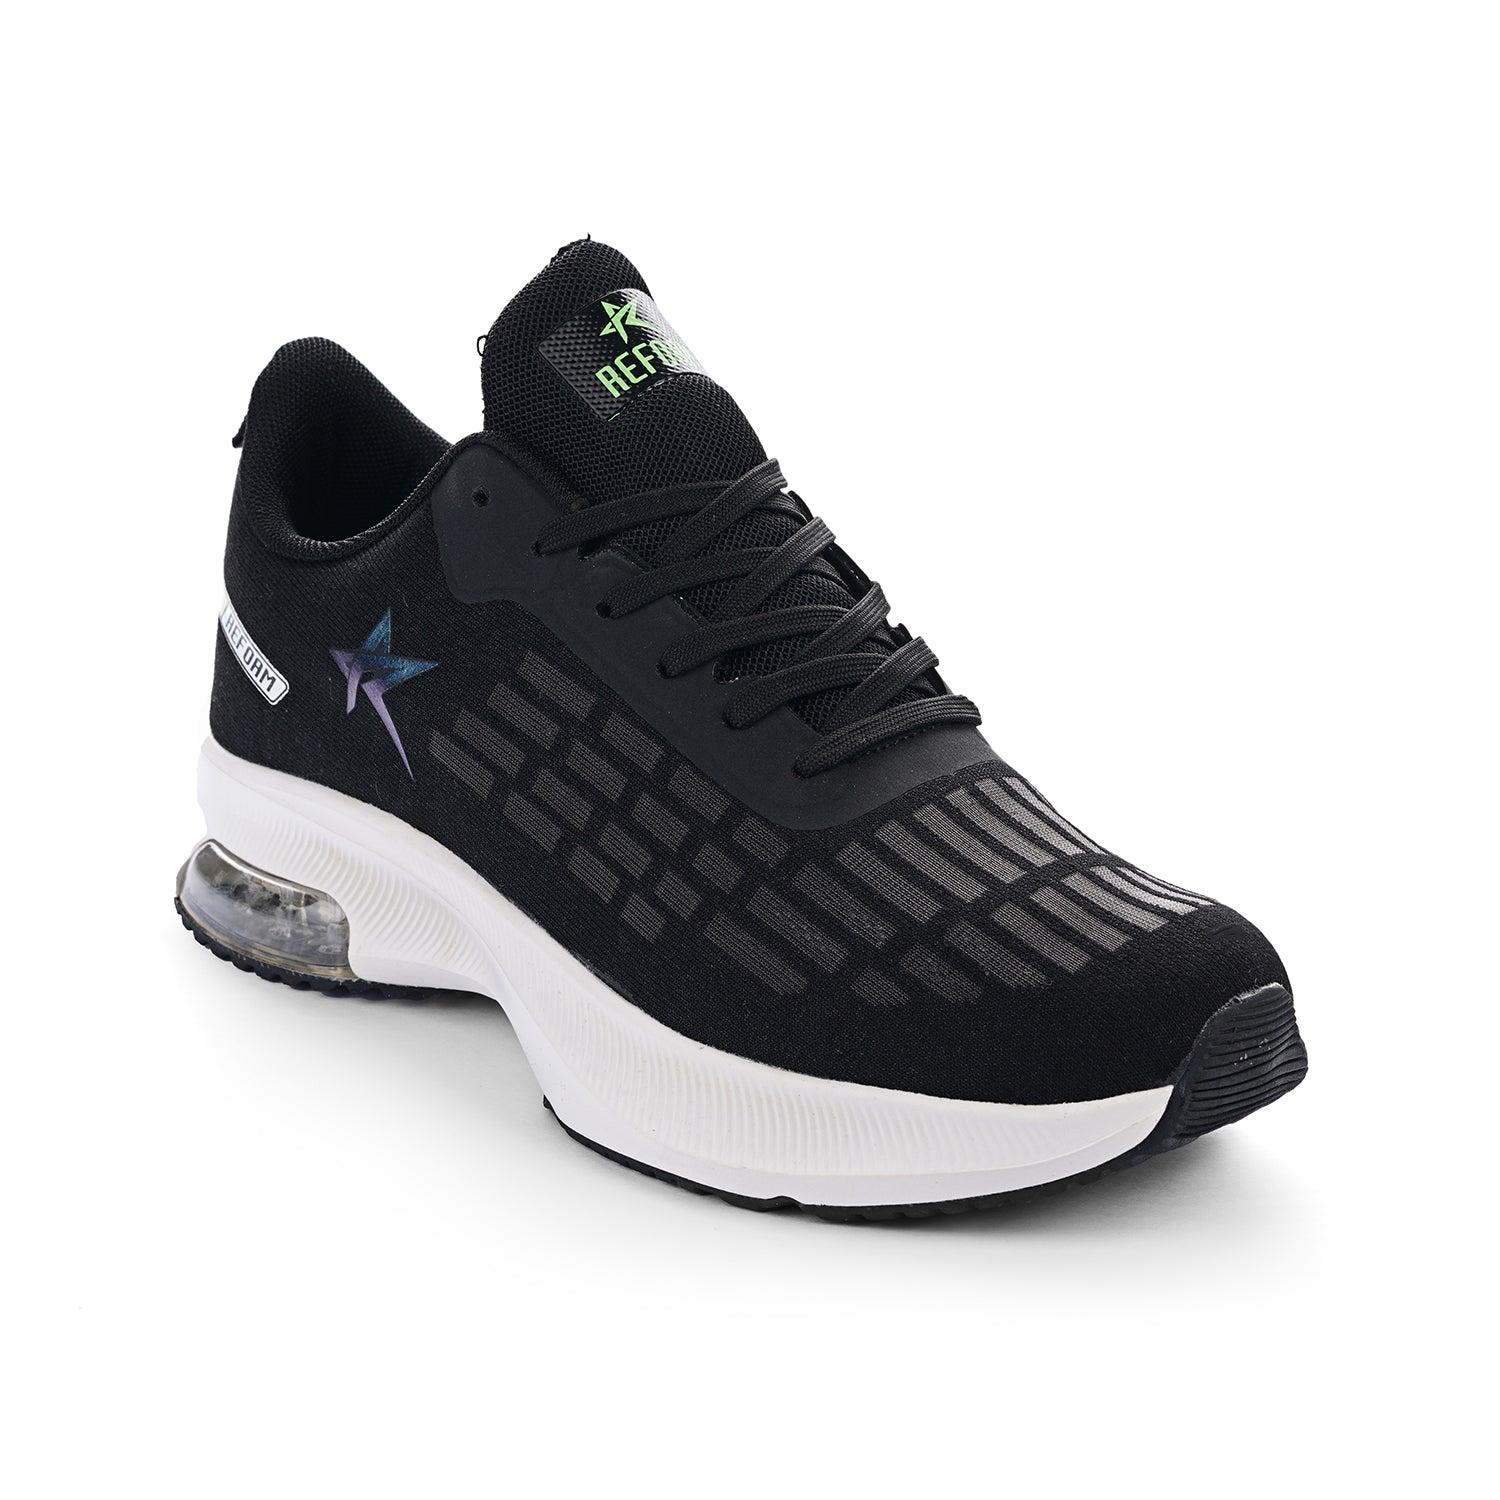 Buy REFOAM Men's Navy Blue Sports Shoe - 8 at Amazon.in